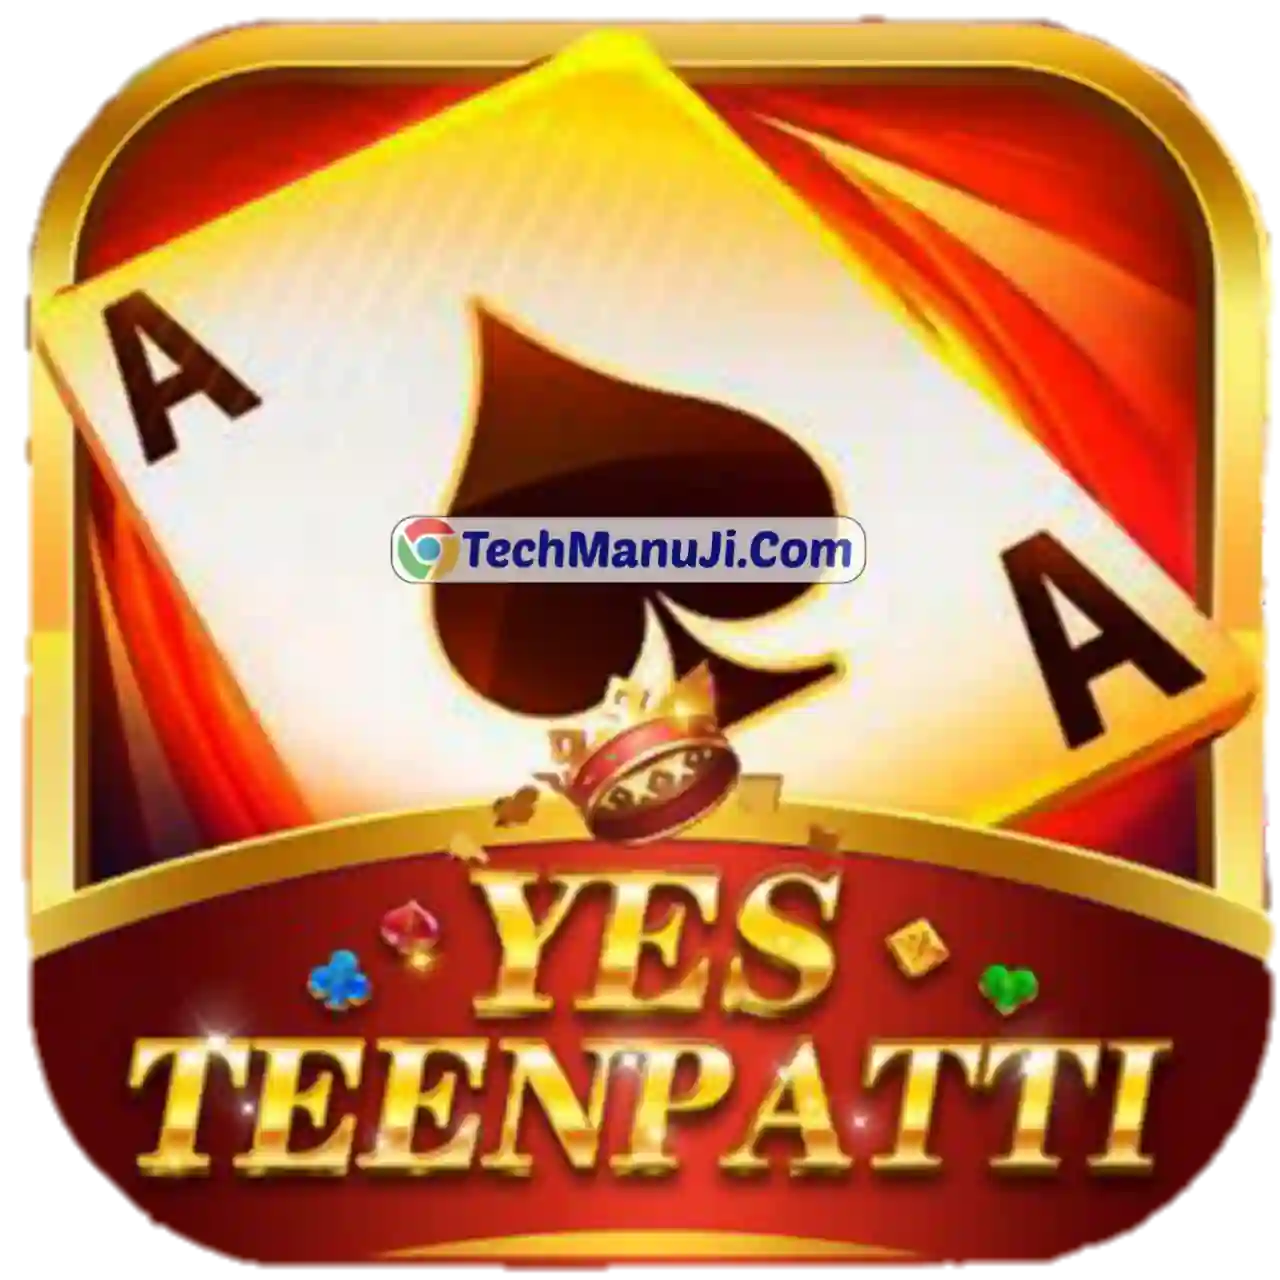 Teen Patti Yes Apk Download - Top 10 Teen Patti App List